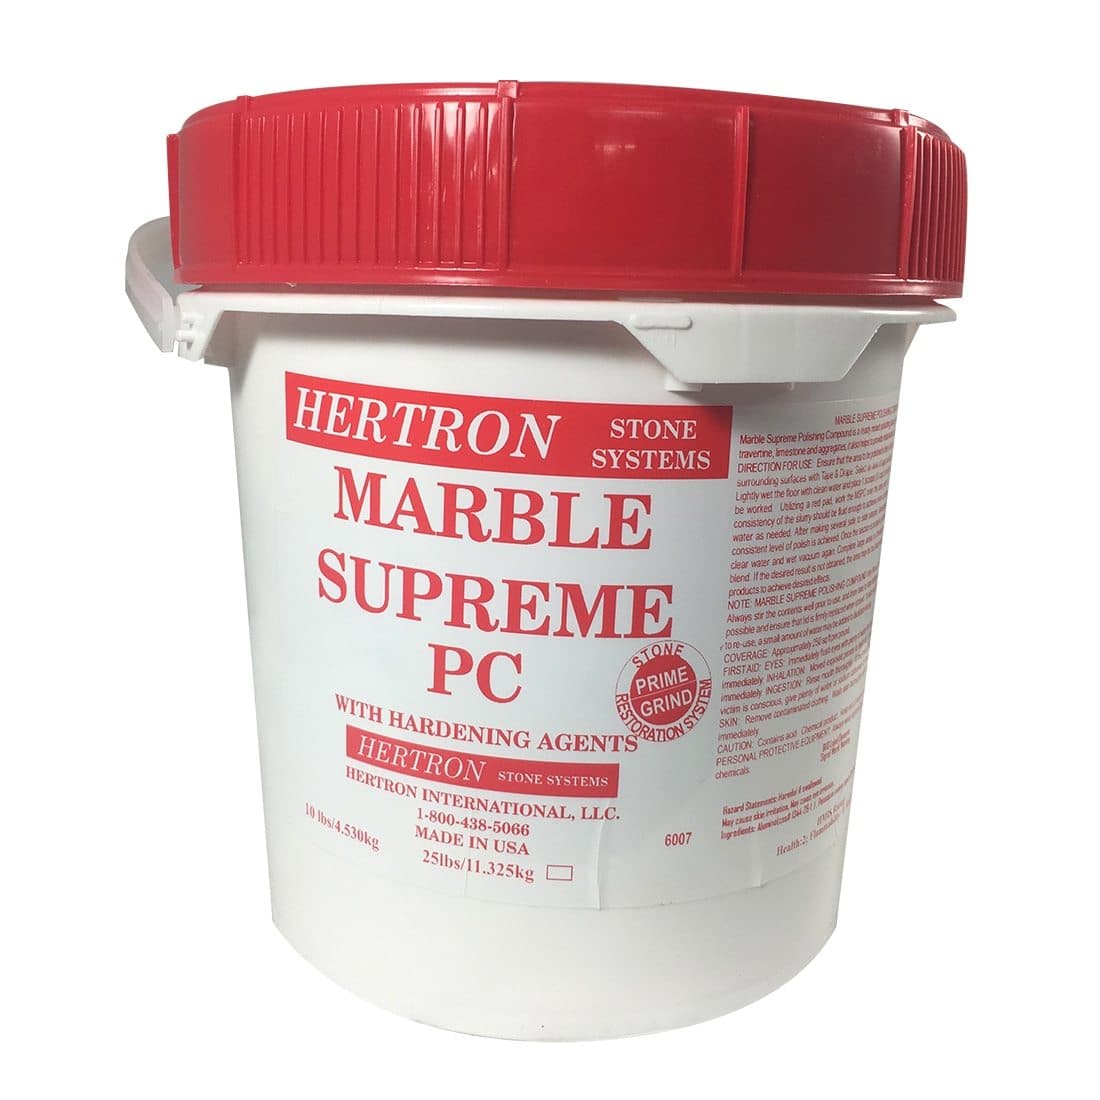 Marble Supreme Polishing Compounds